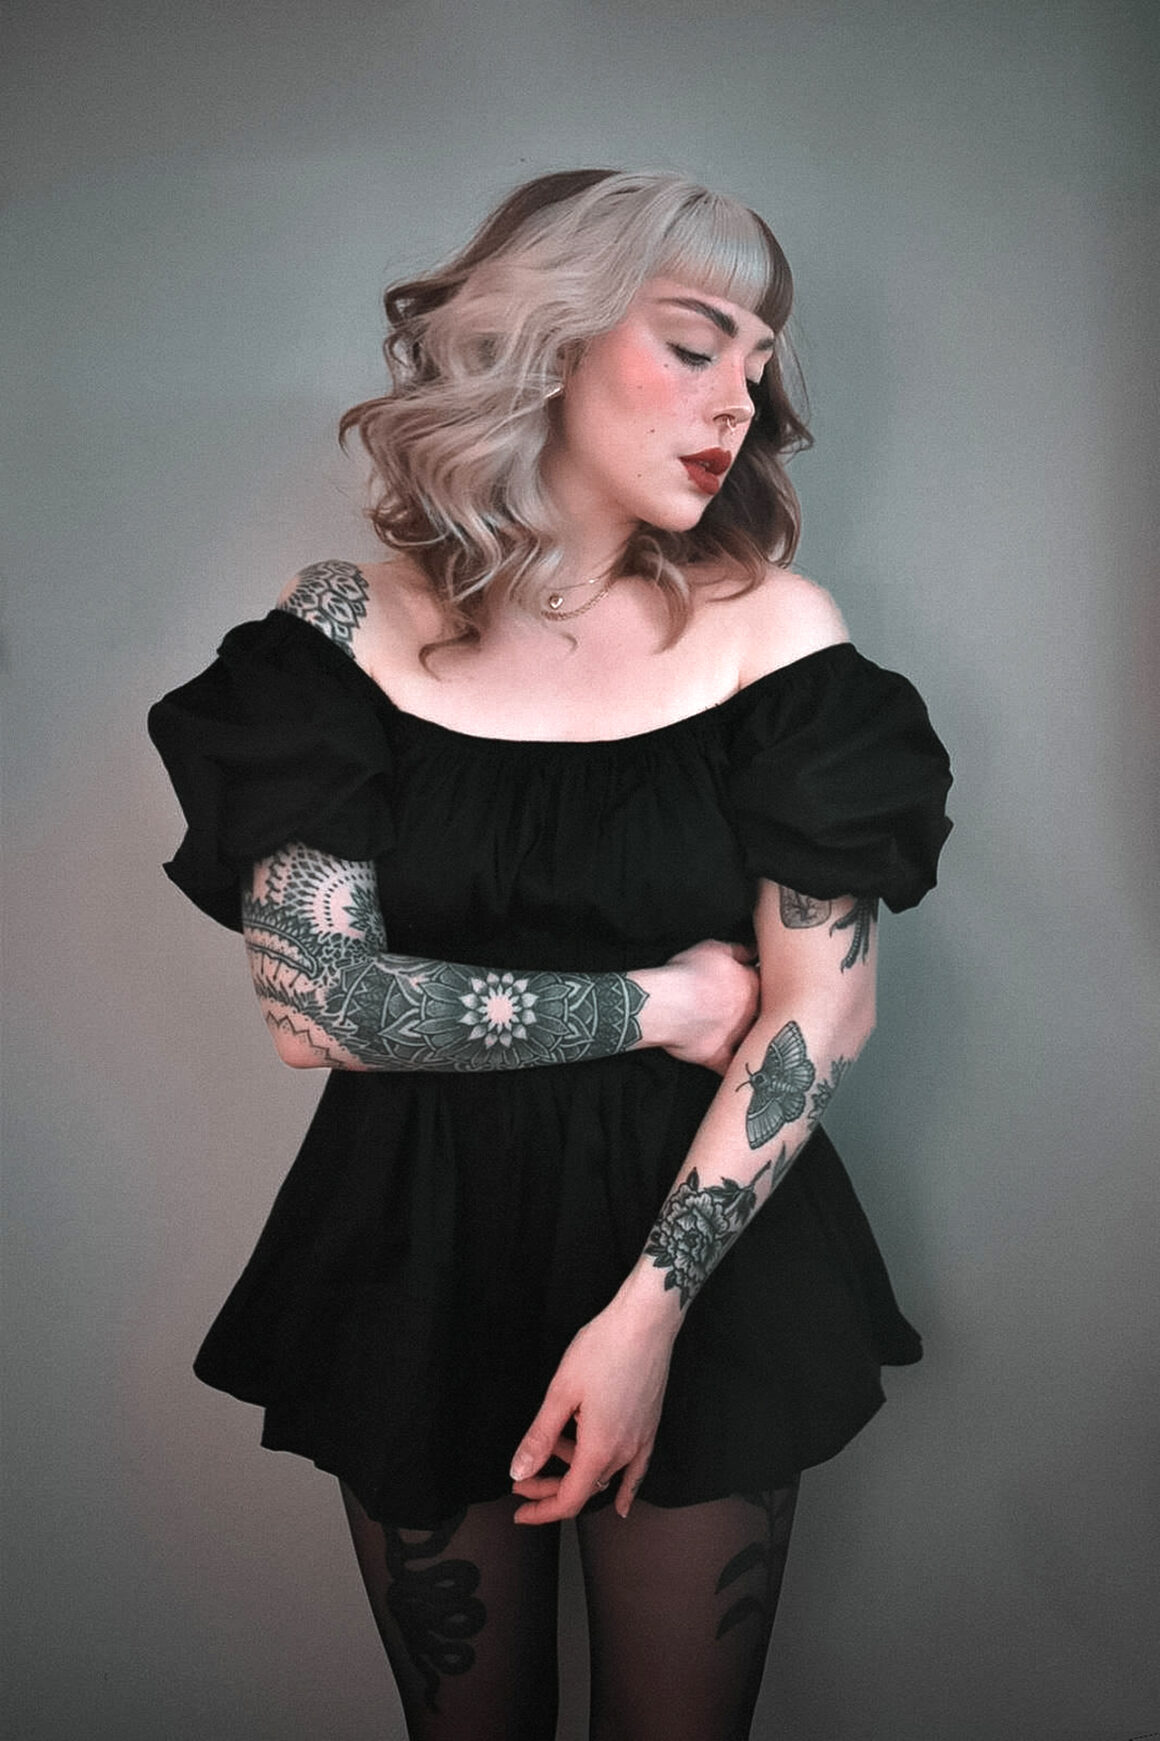 Emilie, modelo de tatuajes, @emelieaxelson